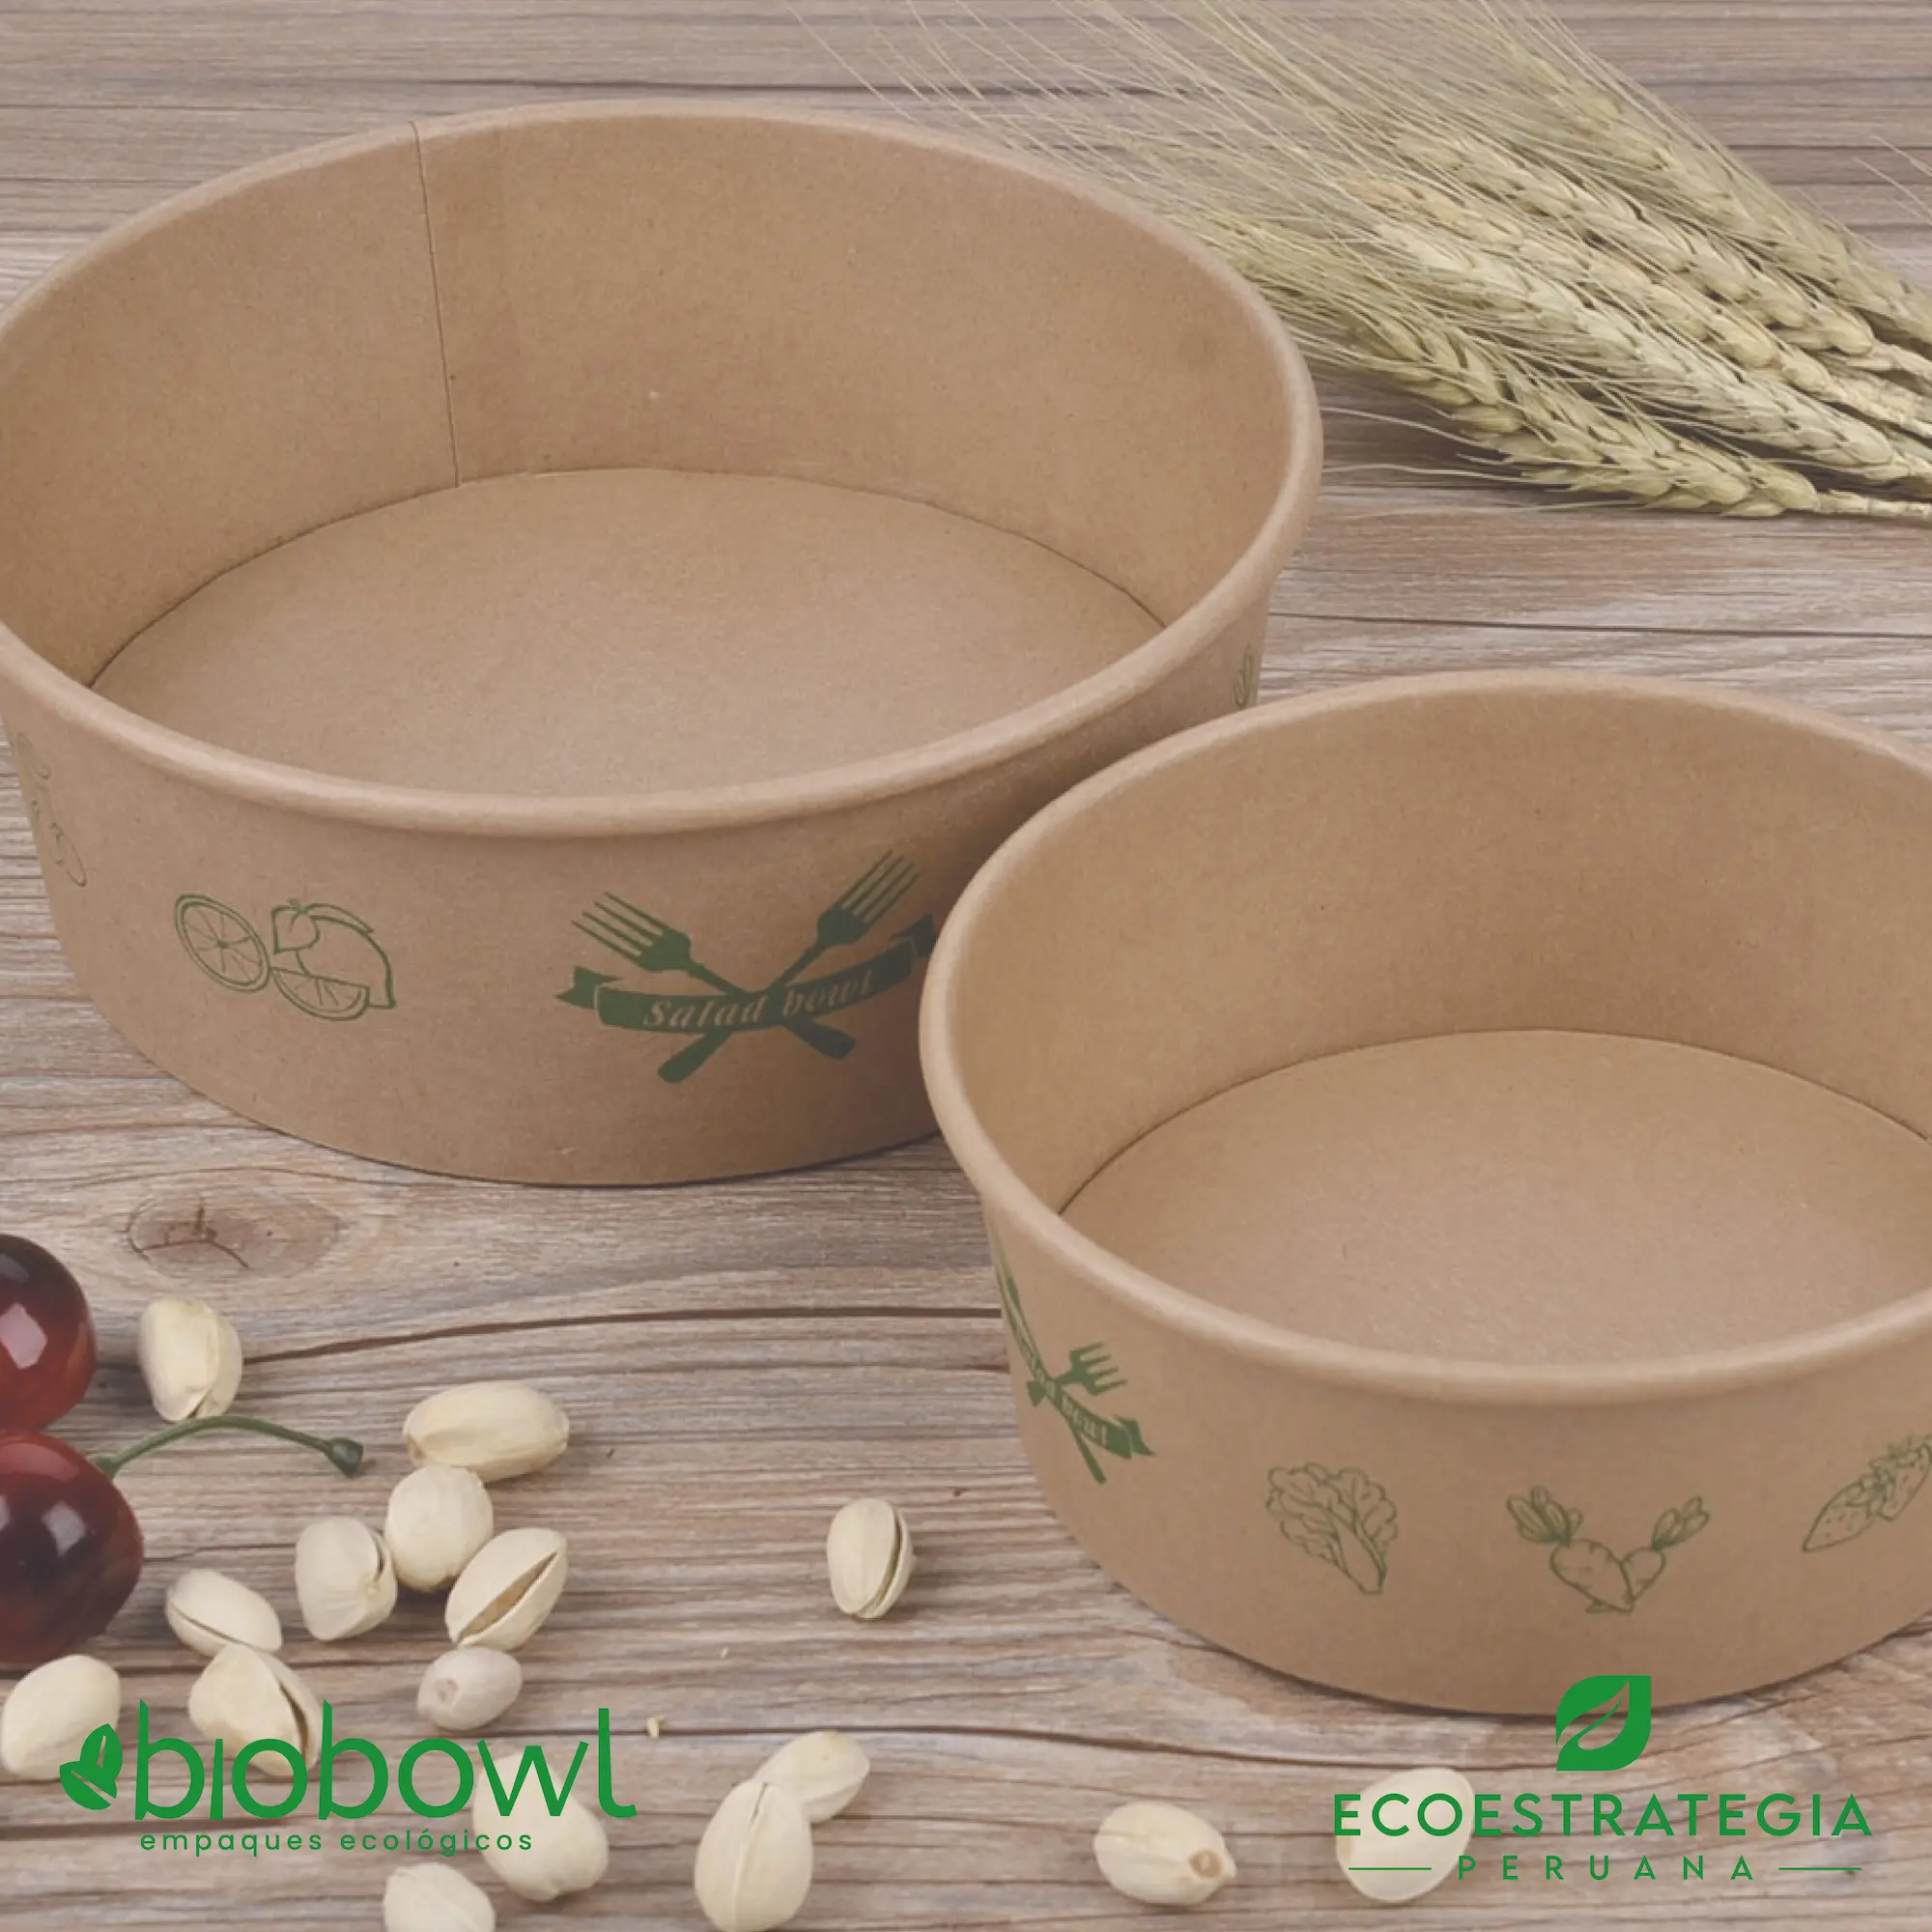 El bowl bambú biodegradable EP-1300 conocido como bowl bamboo 1300ml es también conocido como bowl bambú 1300 ml, bowl de bambú 1300 ml, bowl para helados, bowl biodegradable, bowl bambú 1300 ml con tapa trasparente, salad bowl de bambú 1300 ml, bowl 1000 fibra de bambú + tapa, bowl salad 1300 ml, bowl salad con tapa pet 1300 ml, bowls bambú 1300 ml, bowl bambú 32 oz, bowl biodegradable 1300, envases ecológicos bowl, bowl kraft 1300 ml pamolsa, 100046-100076, sbb-24, sbow1300, bowl con tapa hermética, bowl salad 42 oz, bowl con tapa transparente 1300 ml, bowls bamboo biodegradable, bowls ecologicos, bowls minoristas, bowls biodegradables, bowl para comida marina, bowl biodegradable bambú, salad para comida marina biodegradable, bowl salad para ensaladas, importadores bowl bambú 1300 ml, mayoristas bowl bambú 1300 ml, distribuidores bowl bambú 1300 ml